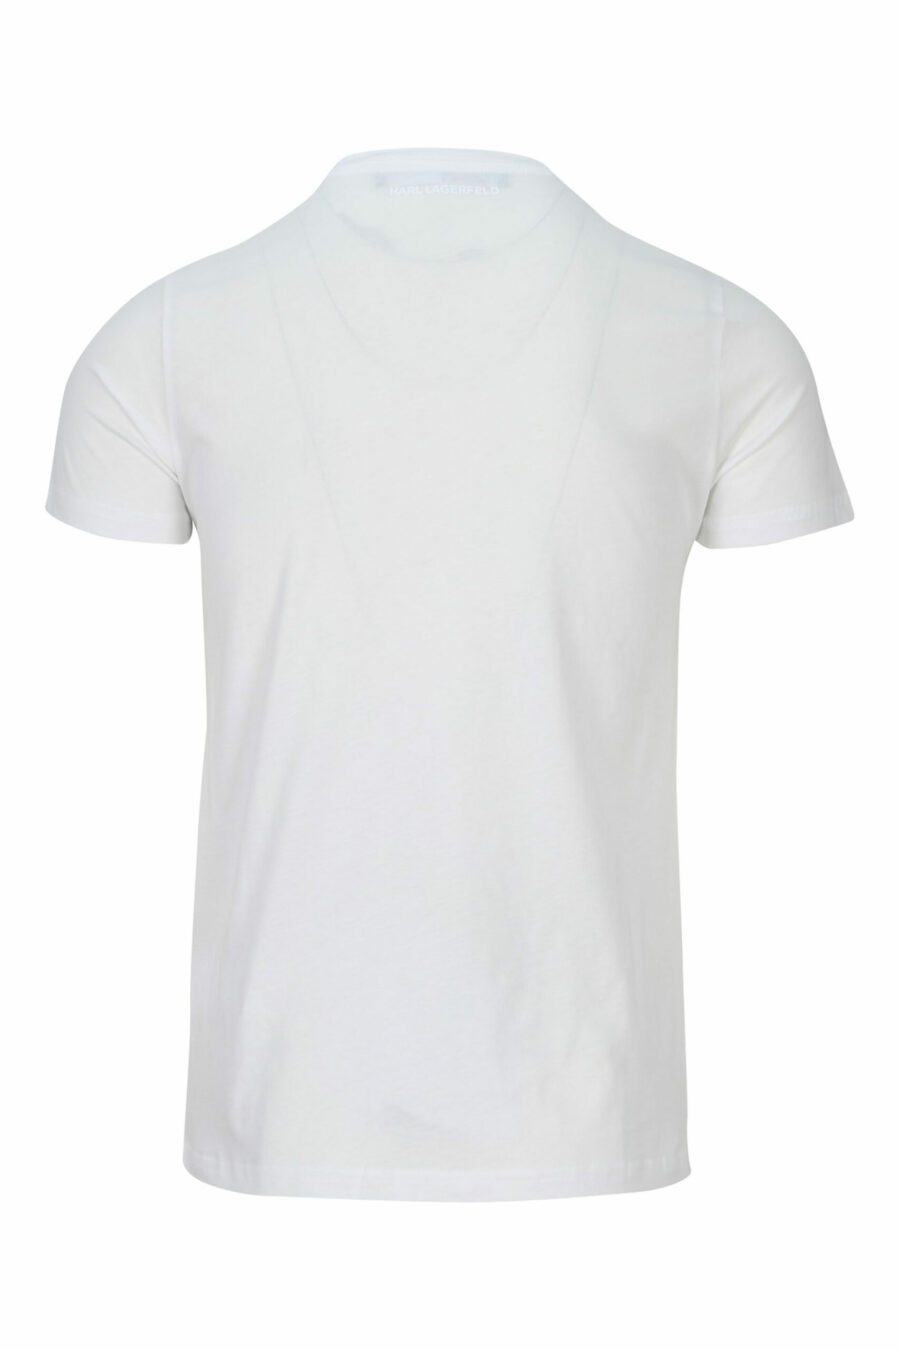 T-shirt branca de gola redonda com maxilogo "karl" - 4062225535237 1 scaled